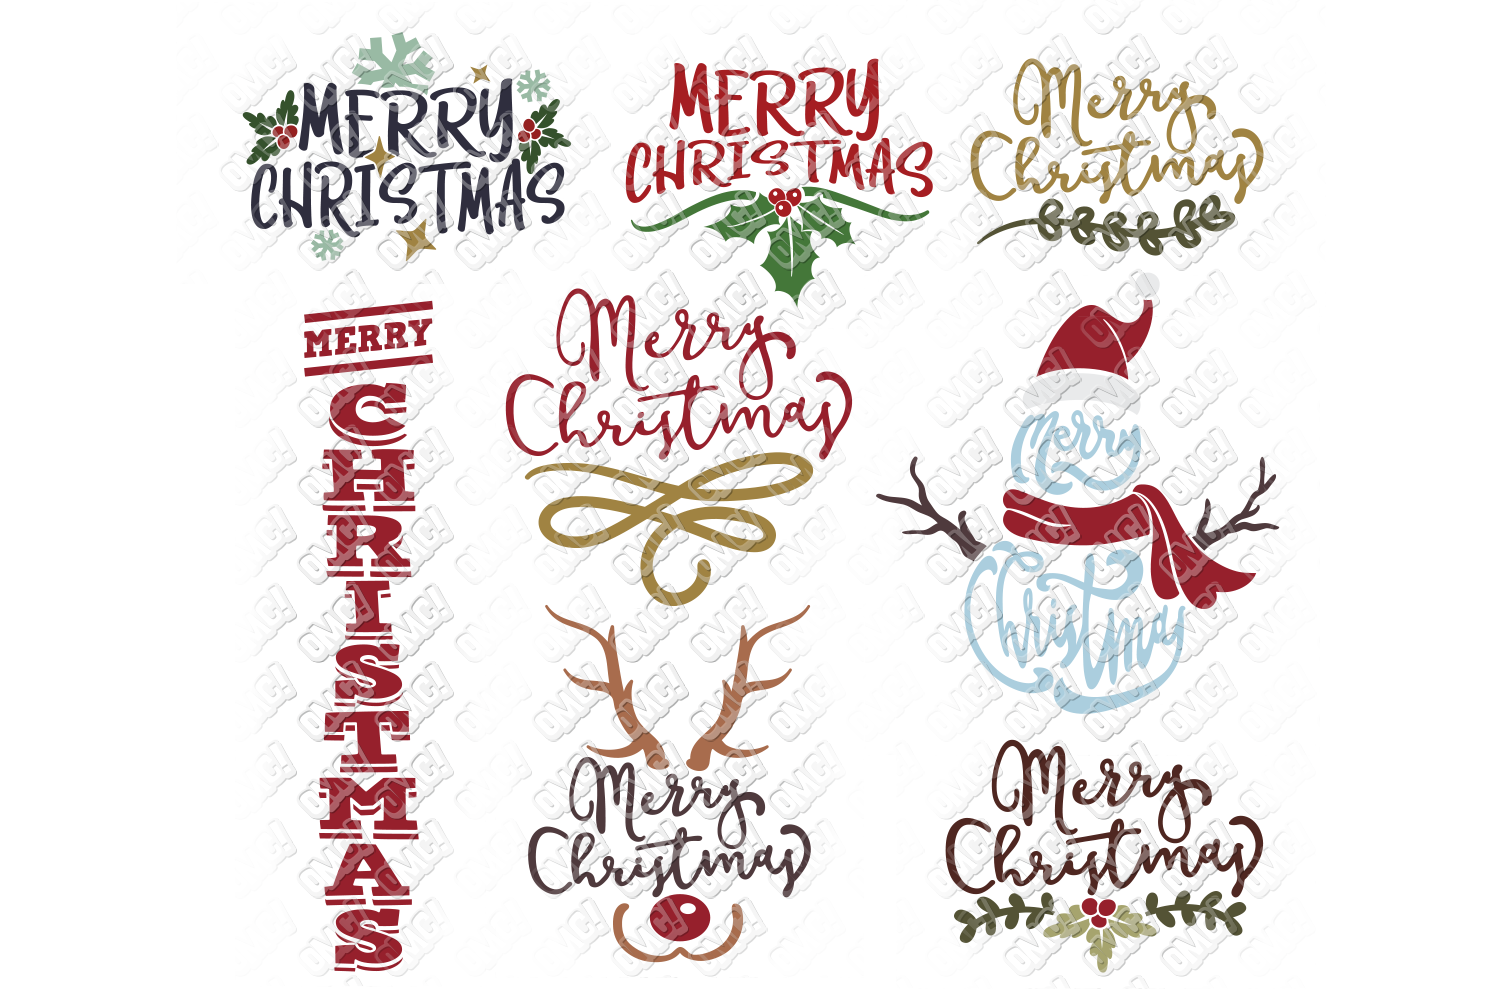 Download Merry Christmas SVG Bundle in SVG, DXF, PNG, EPS, JPEG